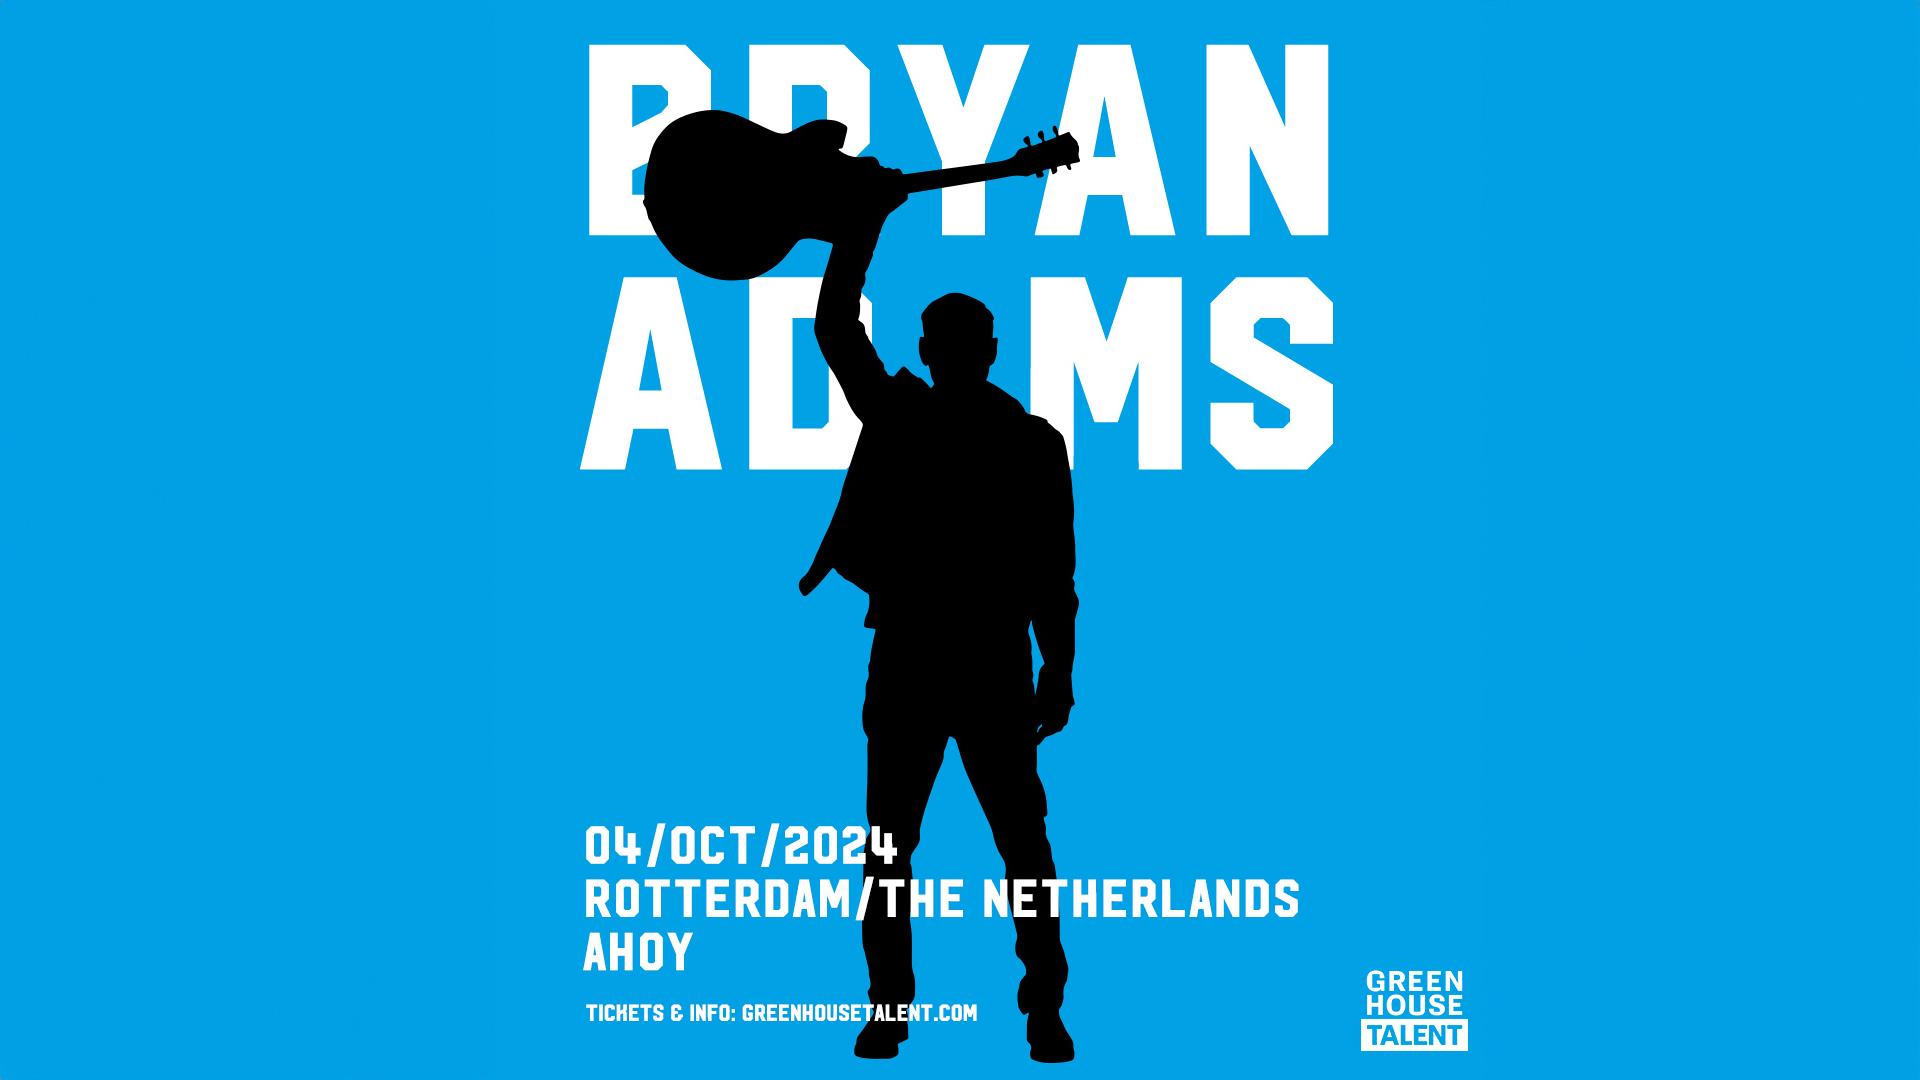 Bryan Adams in oktober naar Rotterdam Ahoy